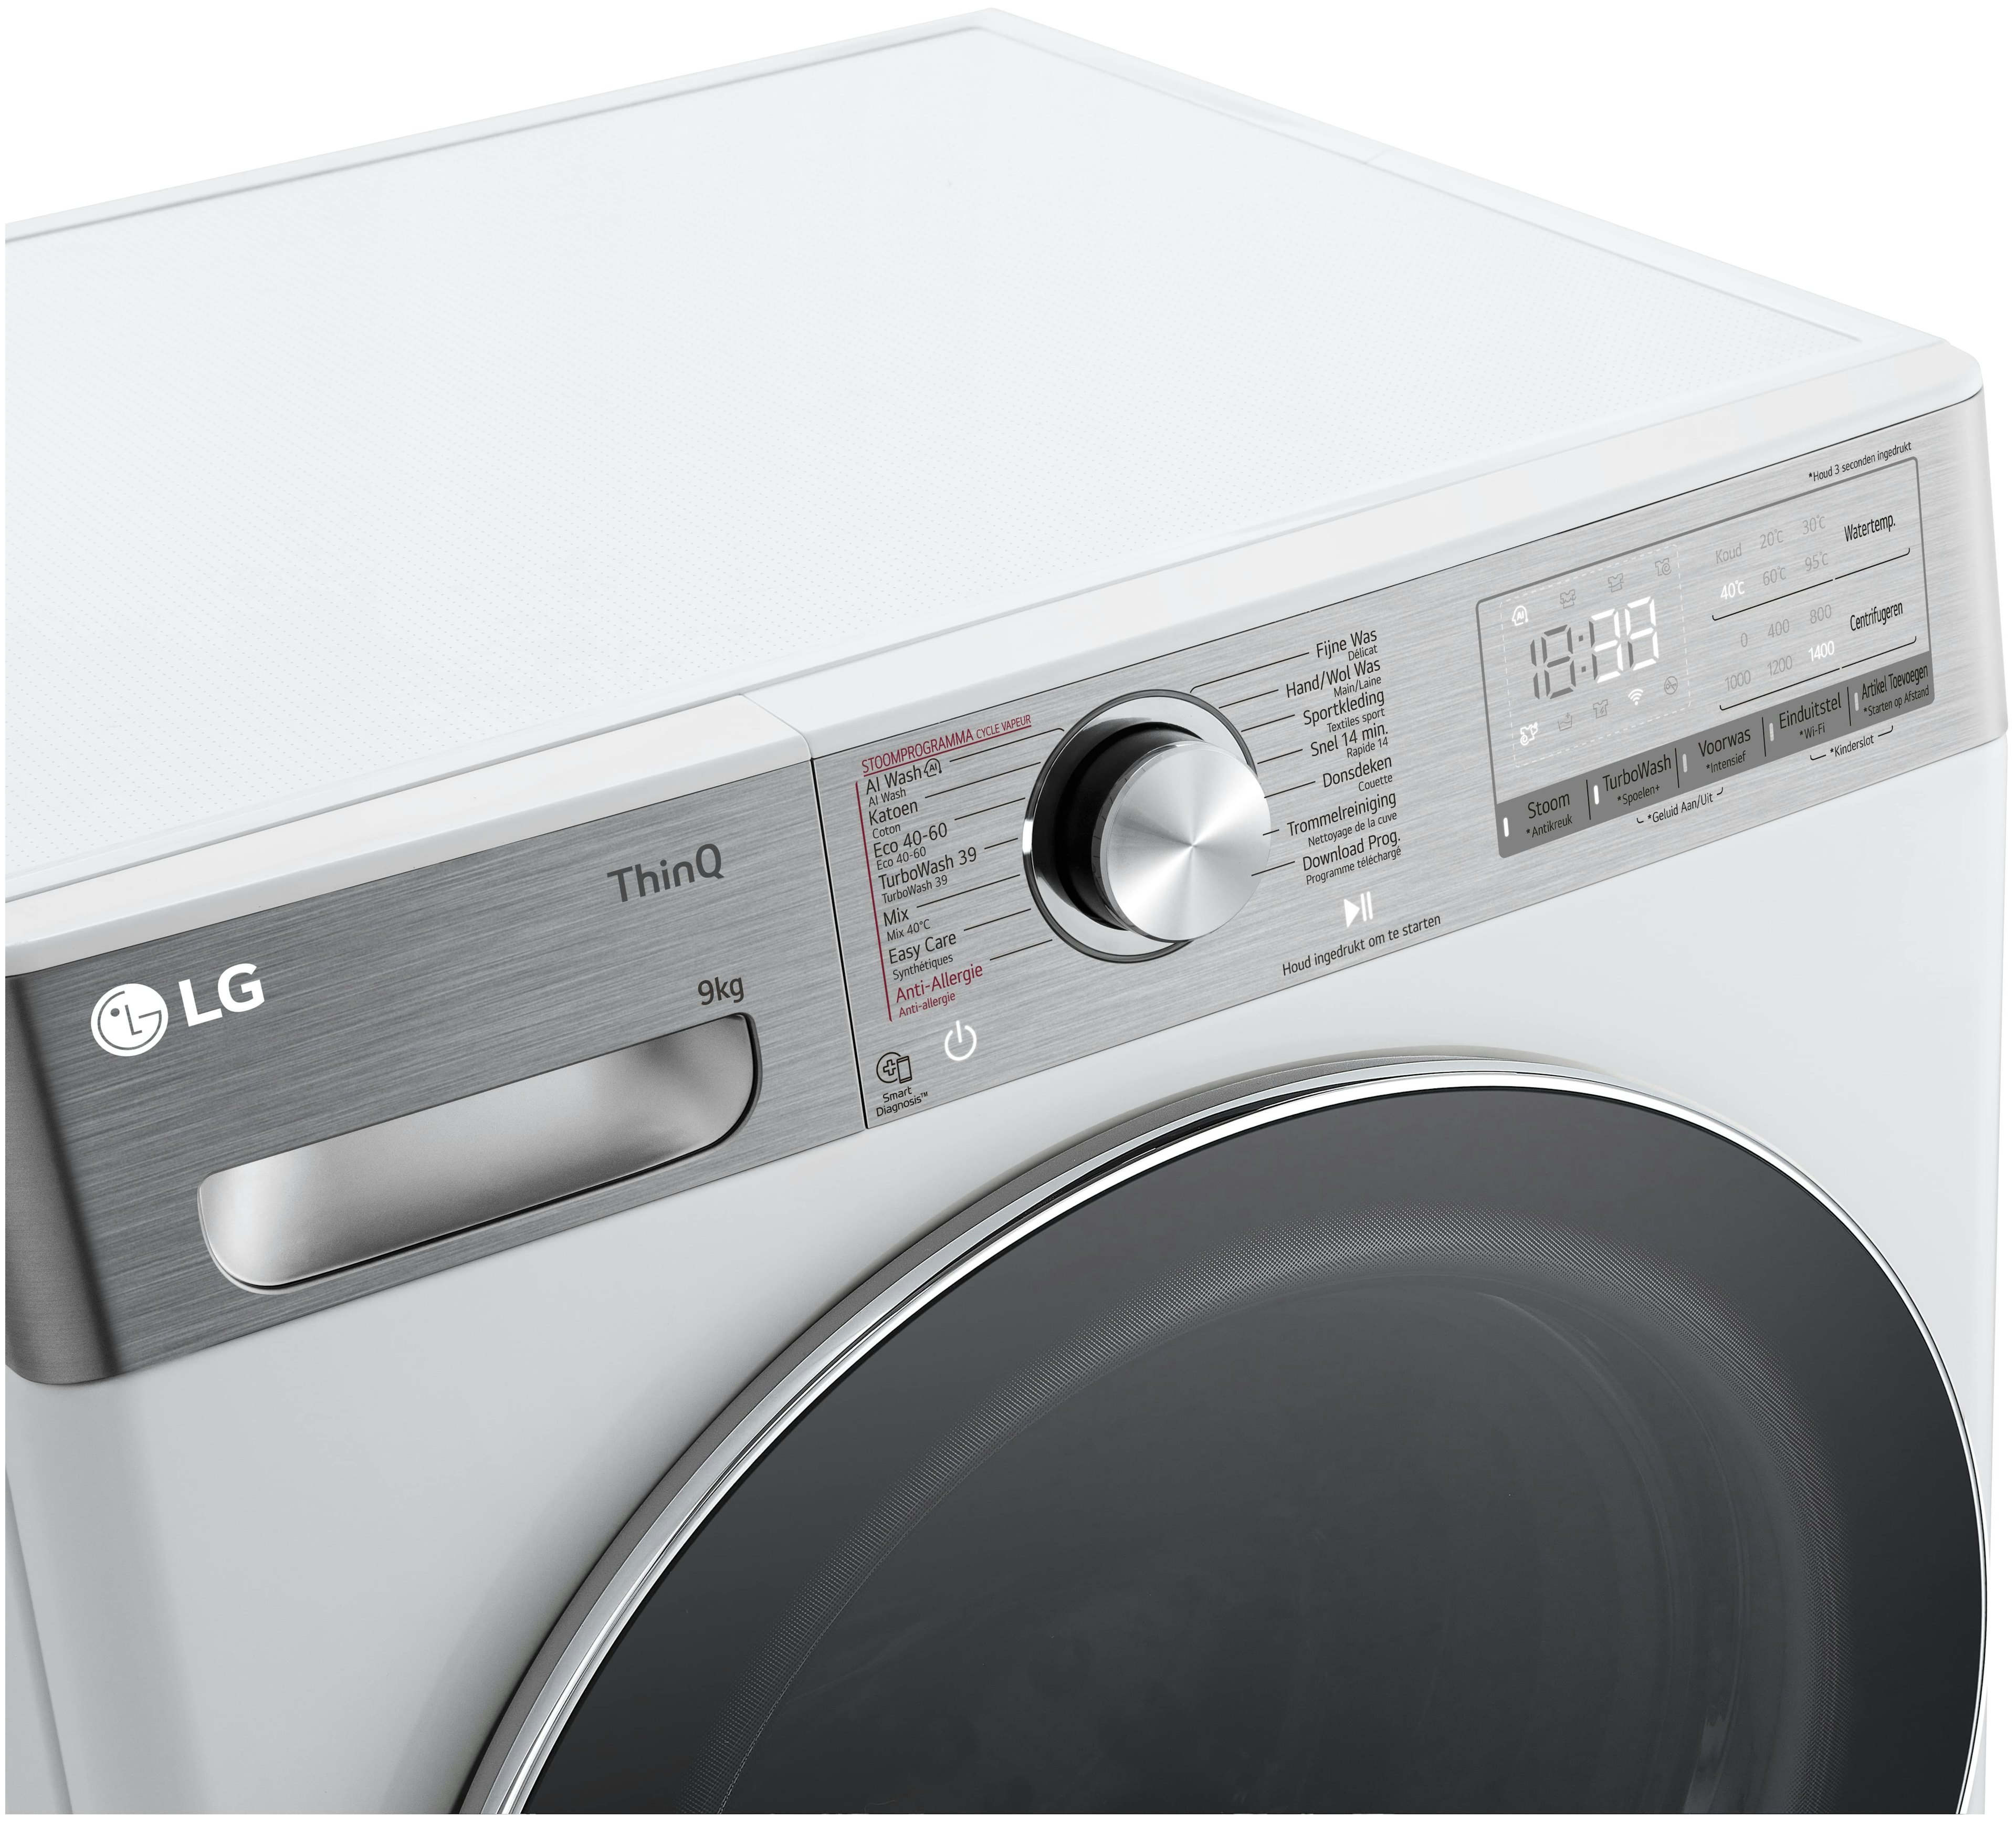 LG wasmachine F4WR9009S2W afbeelding 3